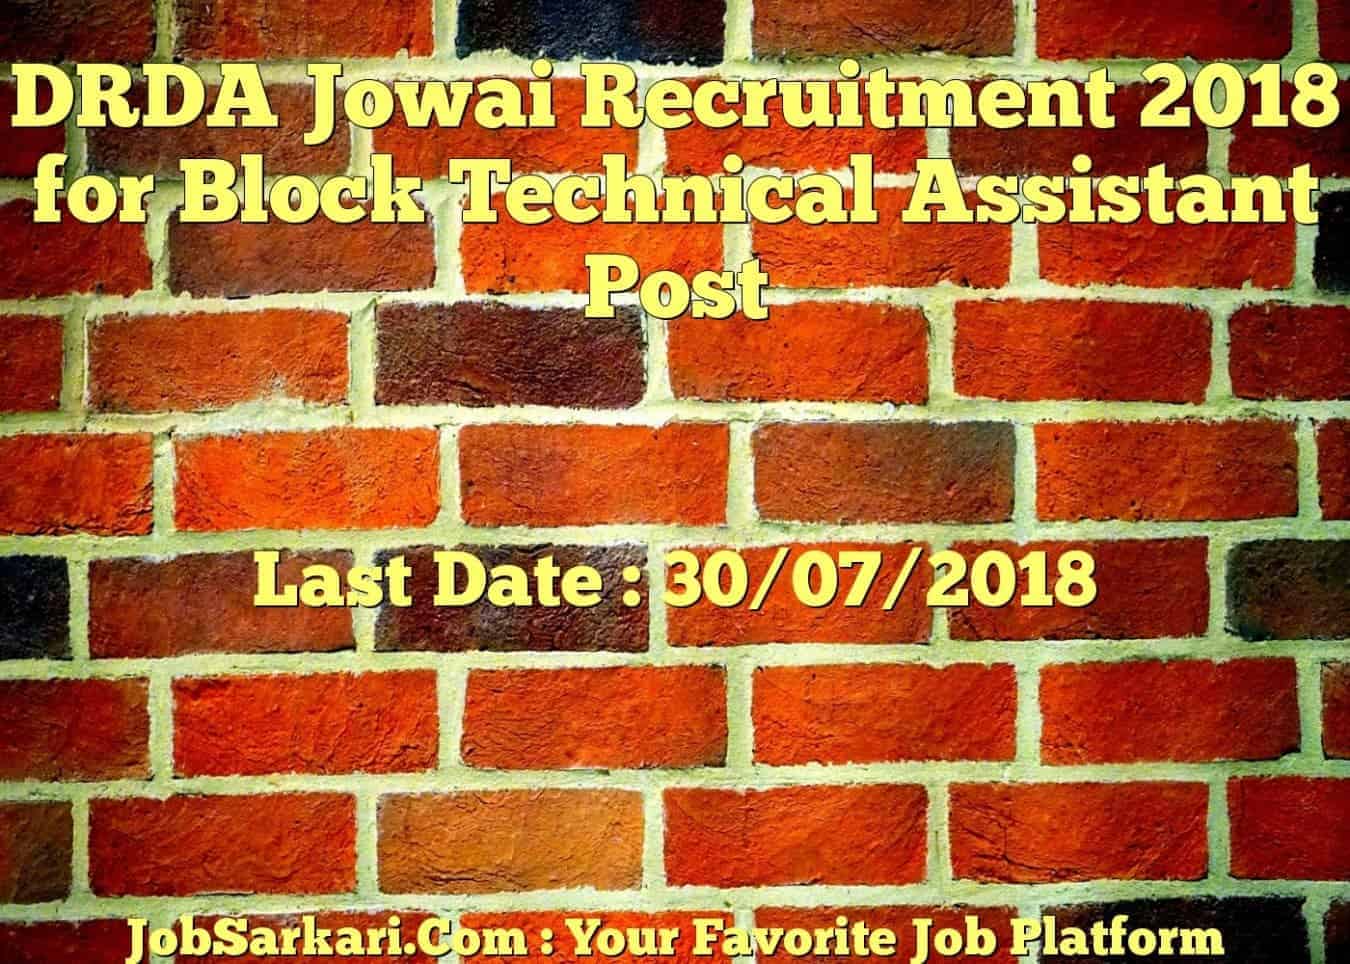 DRDA Jowai Recruitment 2018 for Block Technical Assistant Post